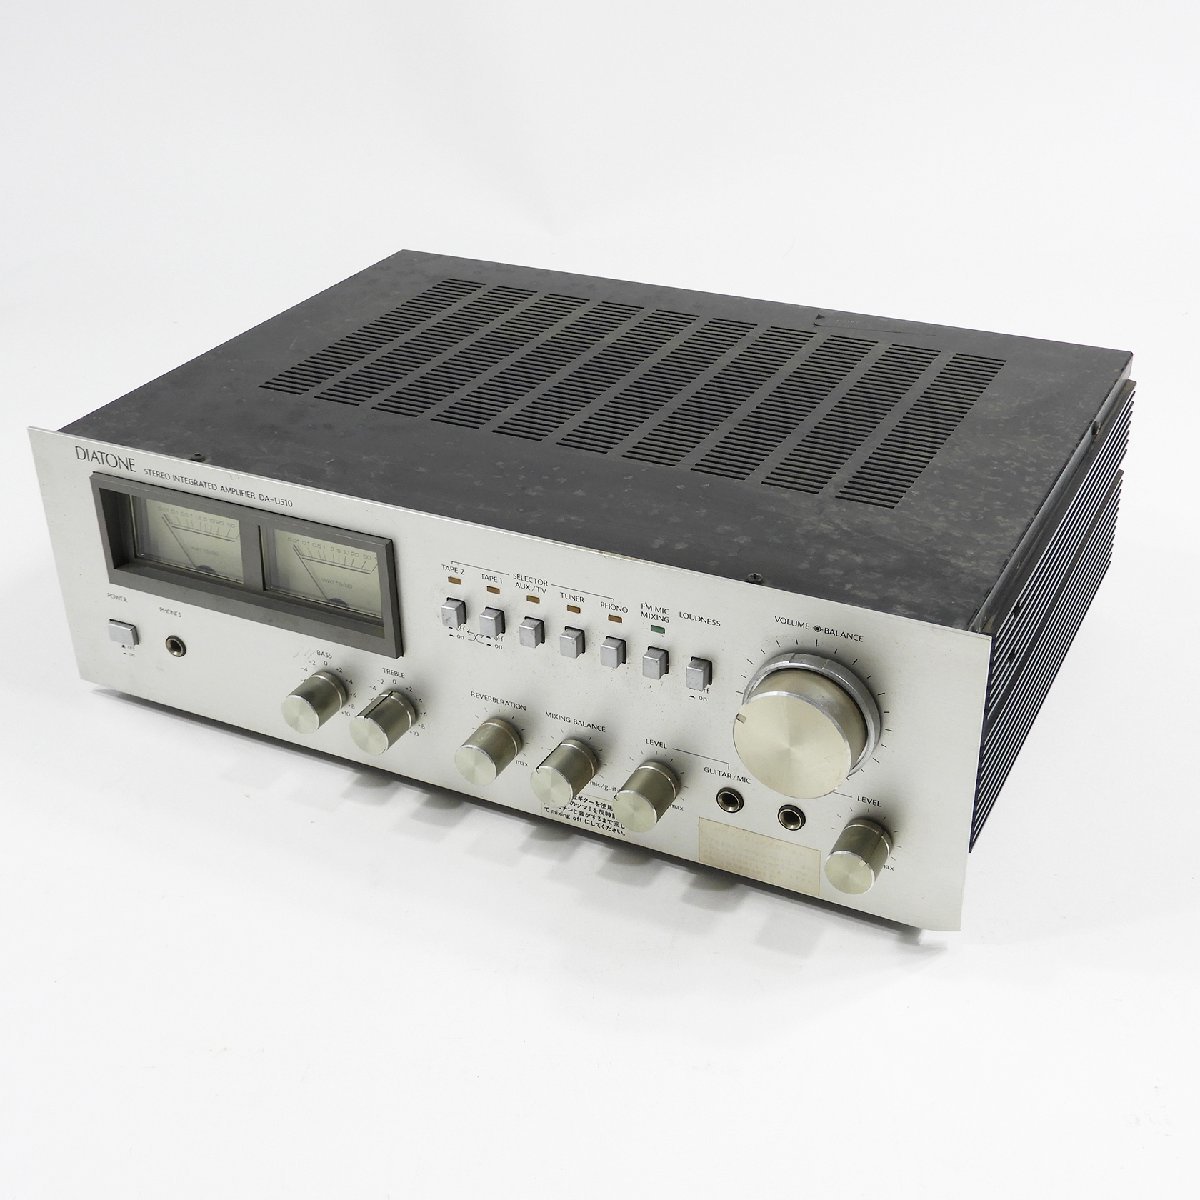 DIATONE INTEGRATED STEREO AMPLIFIER プリメインアンプ アンプ DA-U510 音響機器 ジャンク #16506 趣味 コレクション_画像1